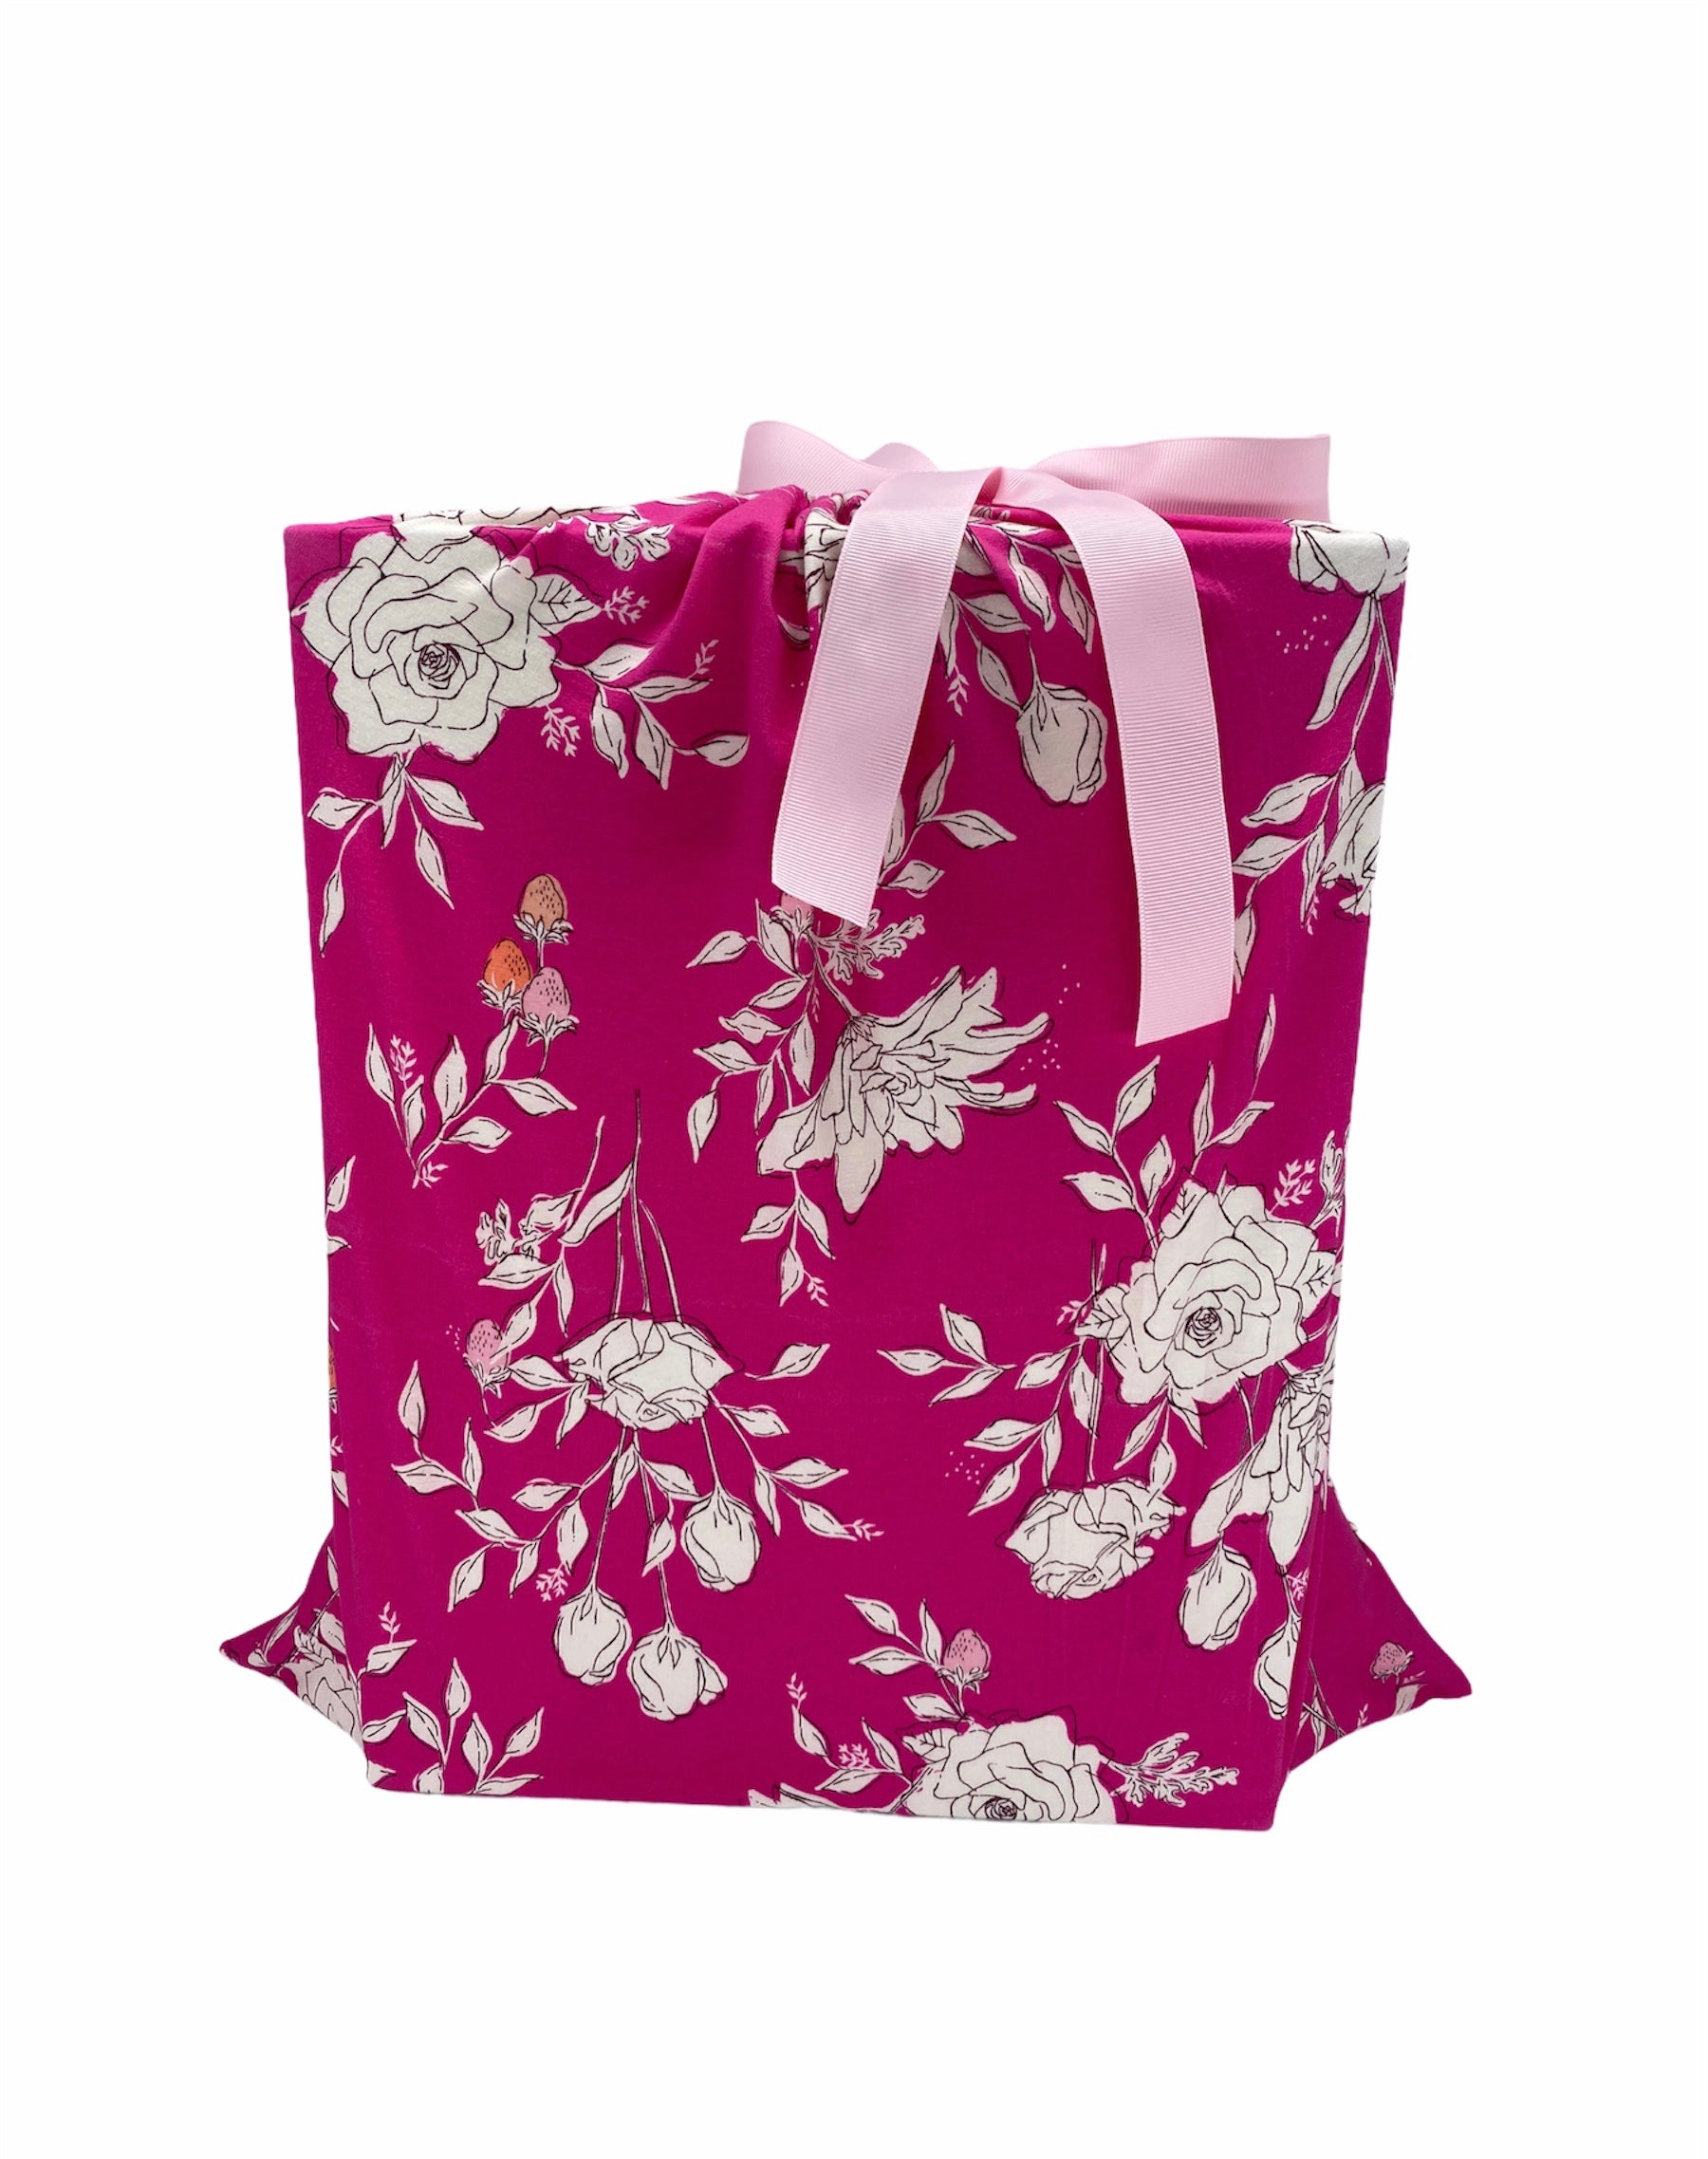 Large Bloom & Strawberries gift bag